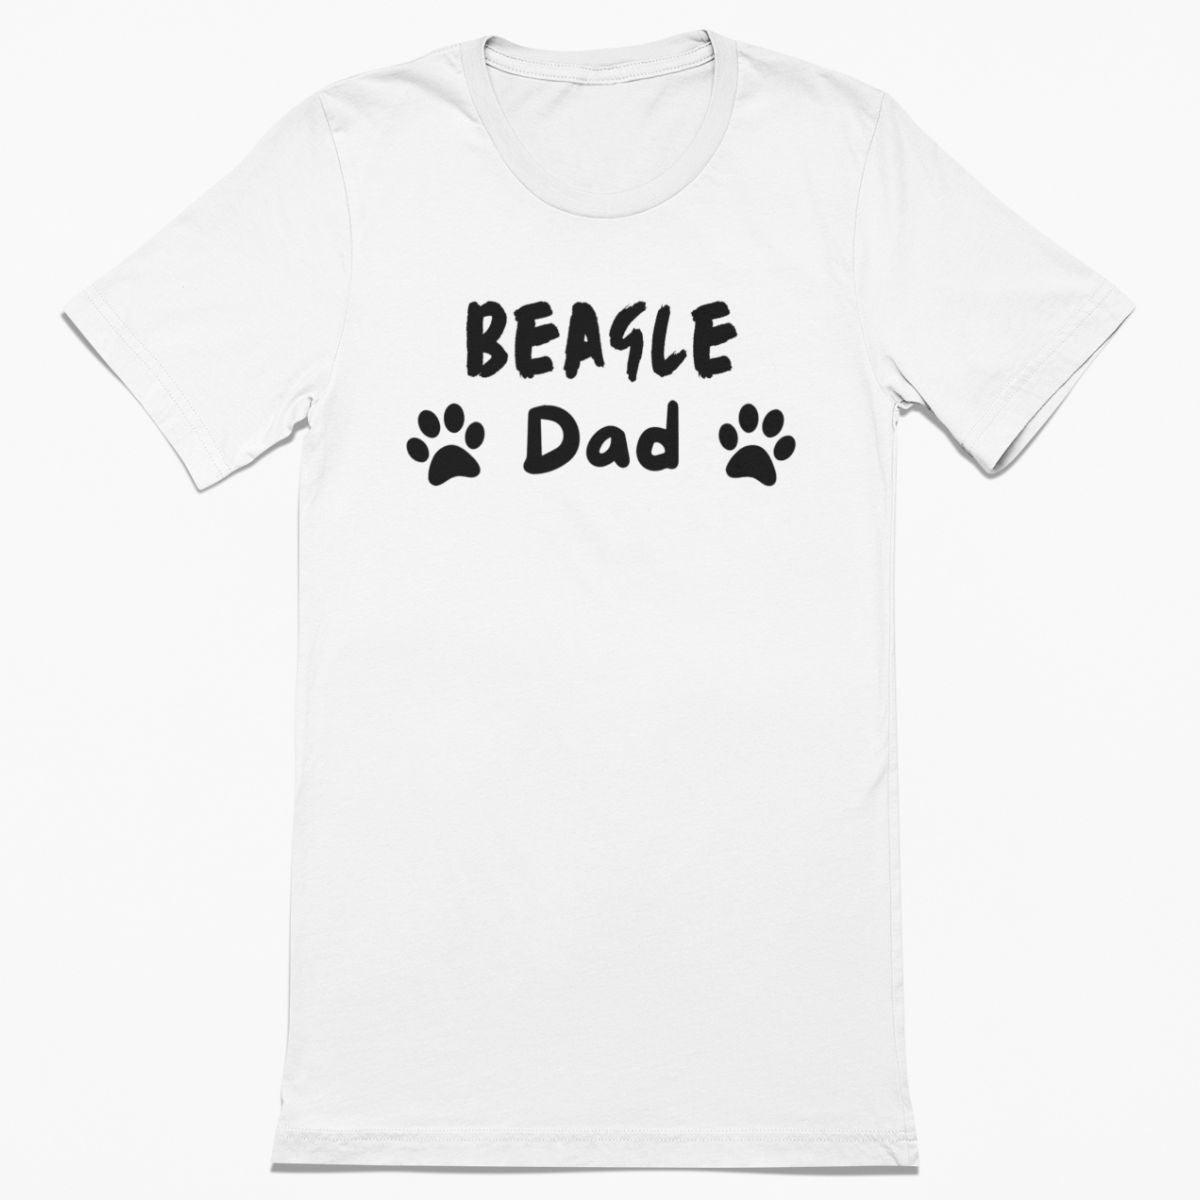 Beagle Dad Shirt